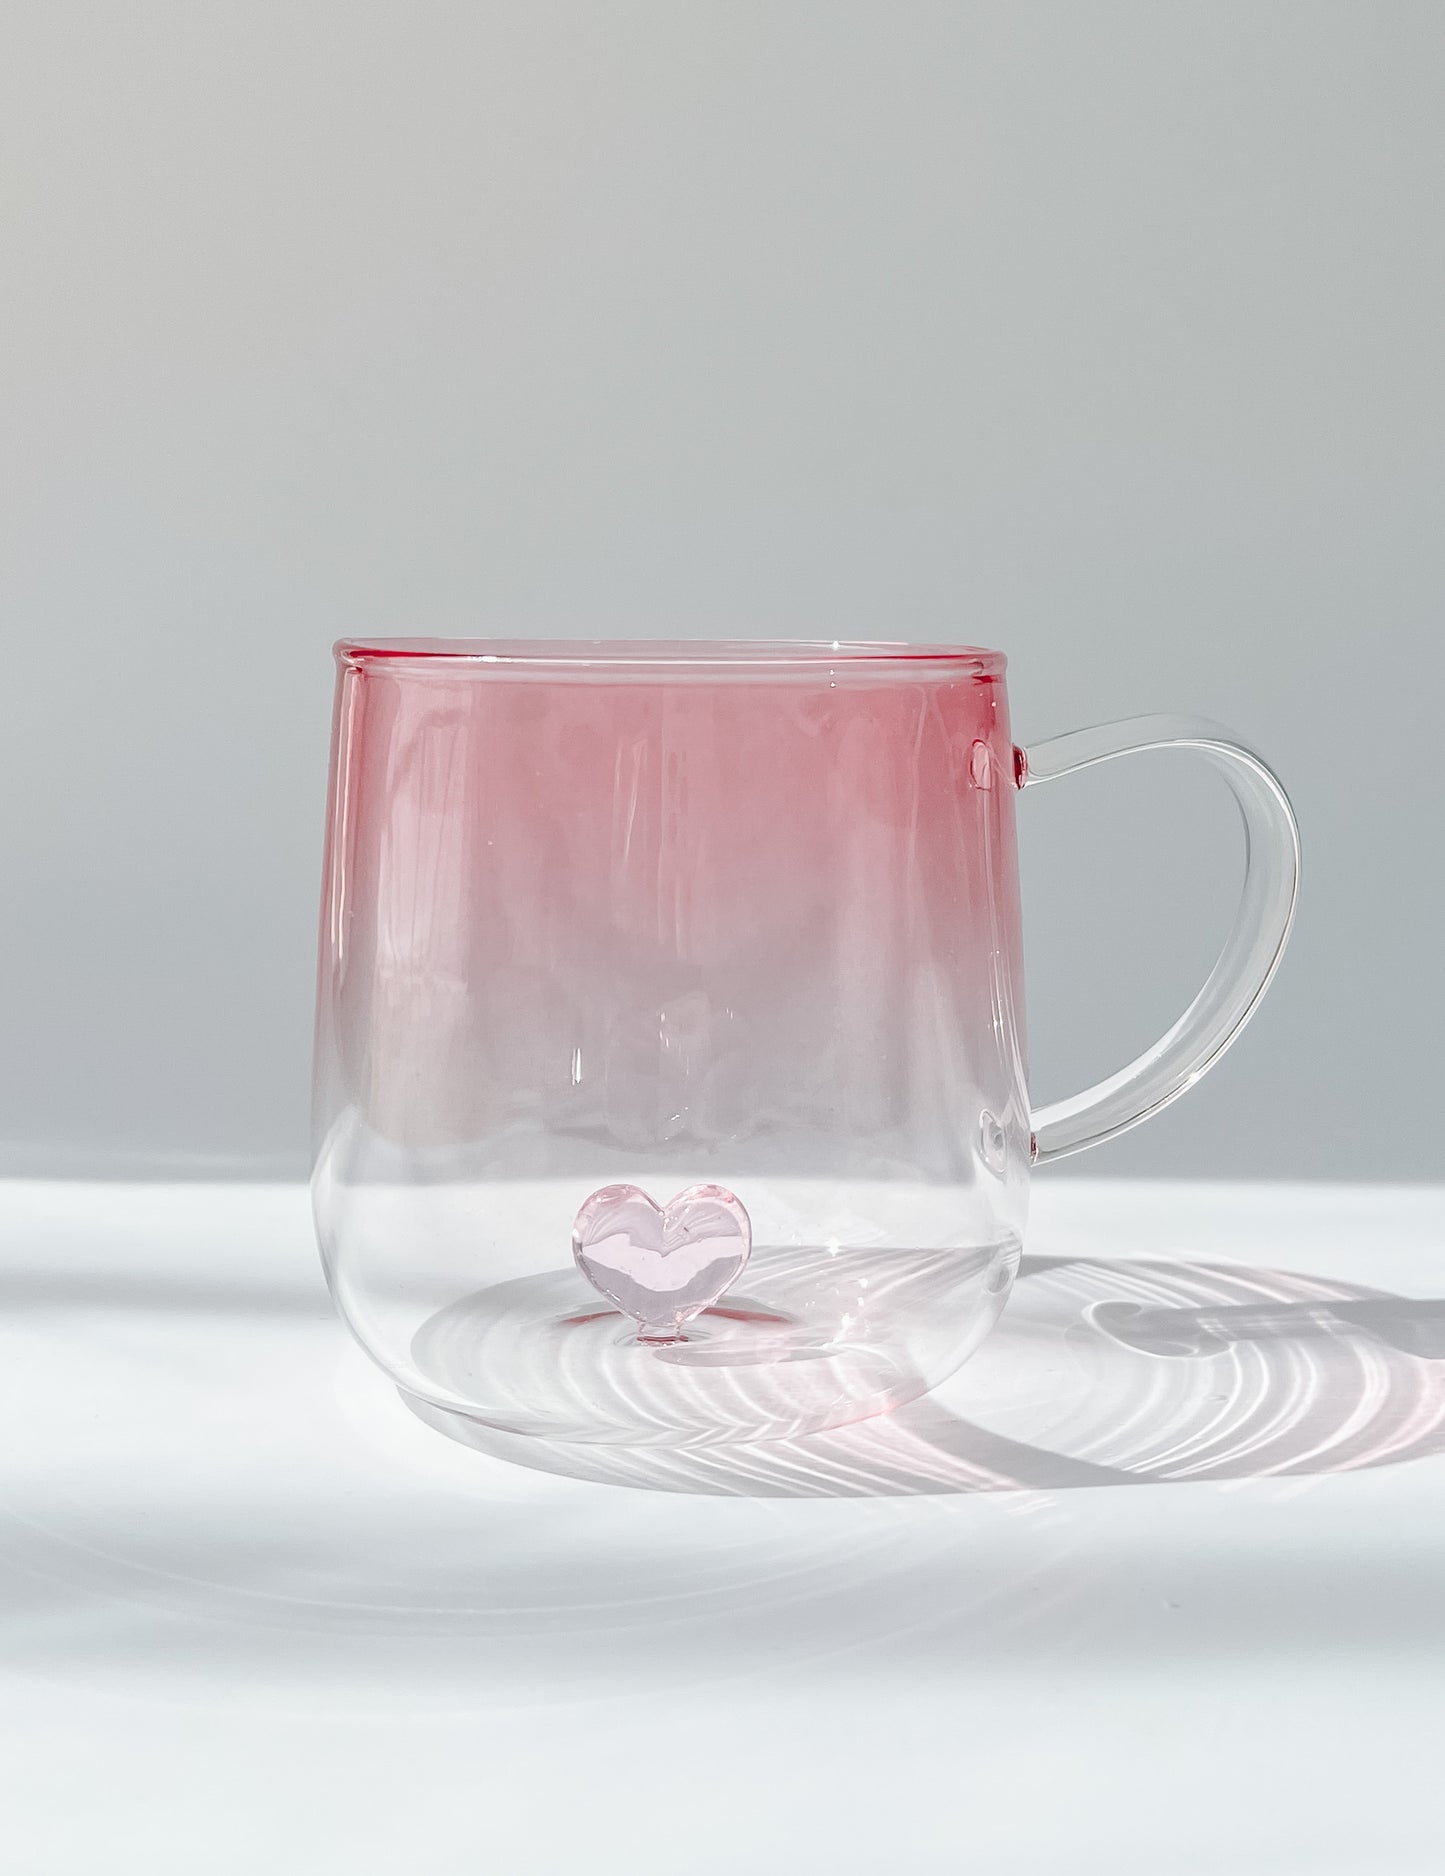 Rosy Love Mug | 400ml